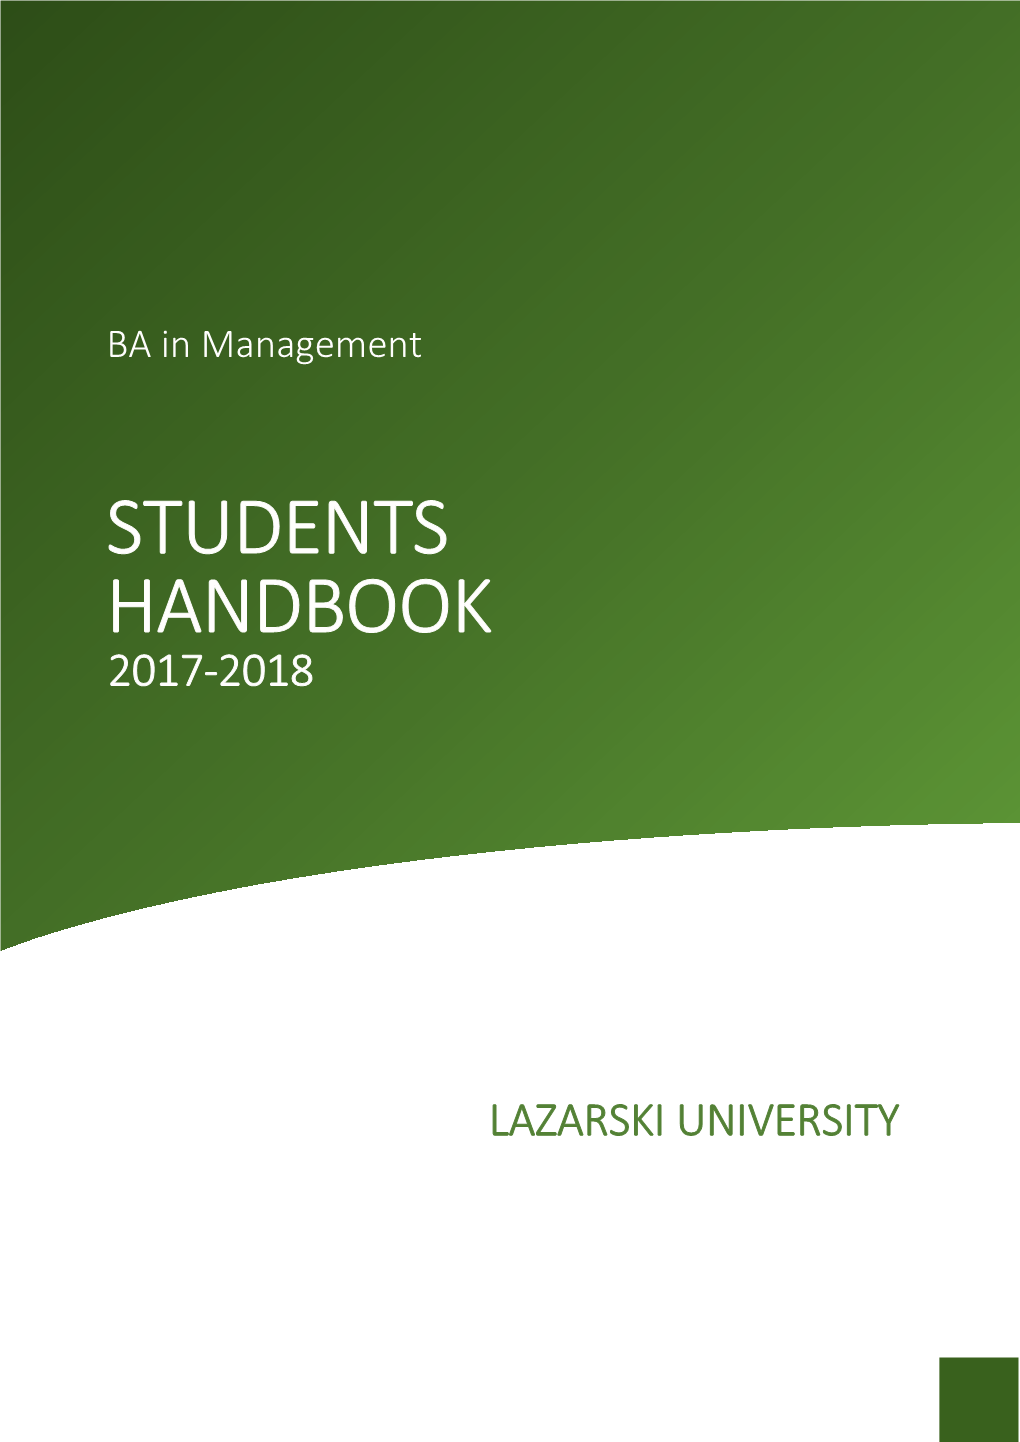 Students Handbook 2017-2018